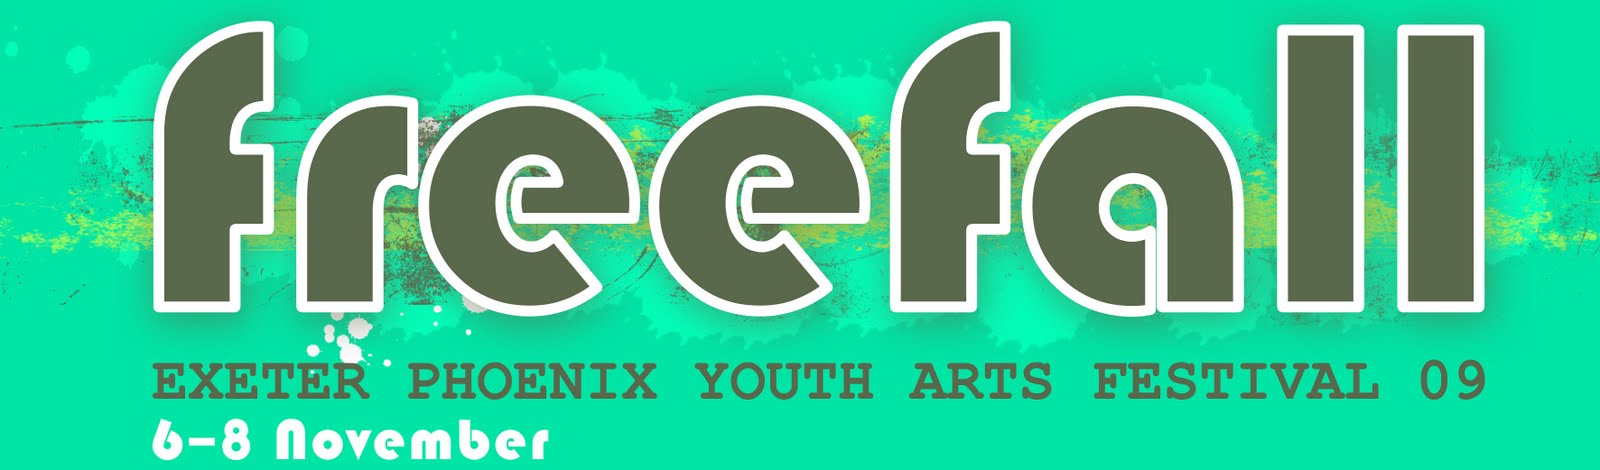 Exeter Phoenix Youth Arts Festival